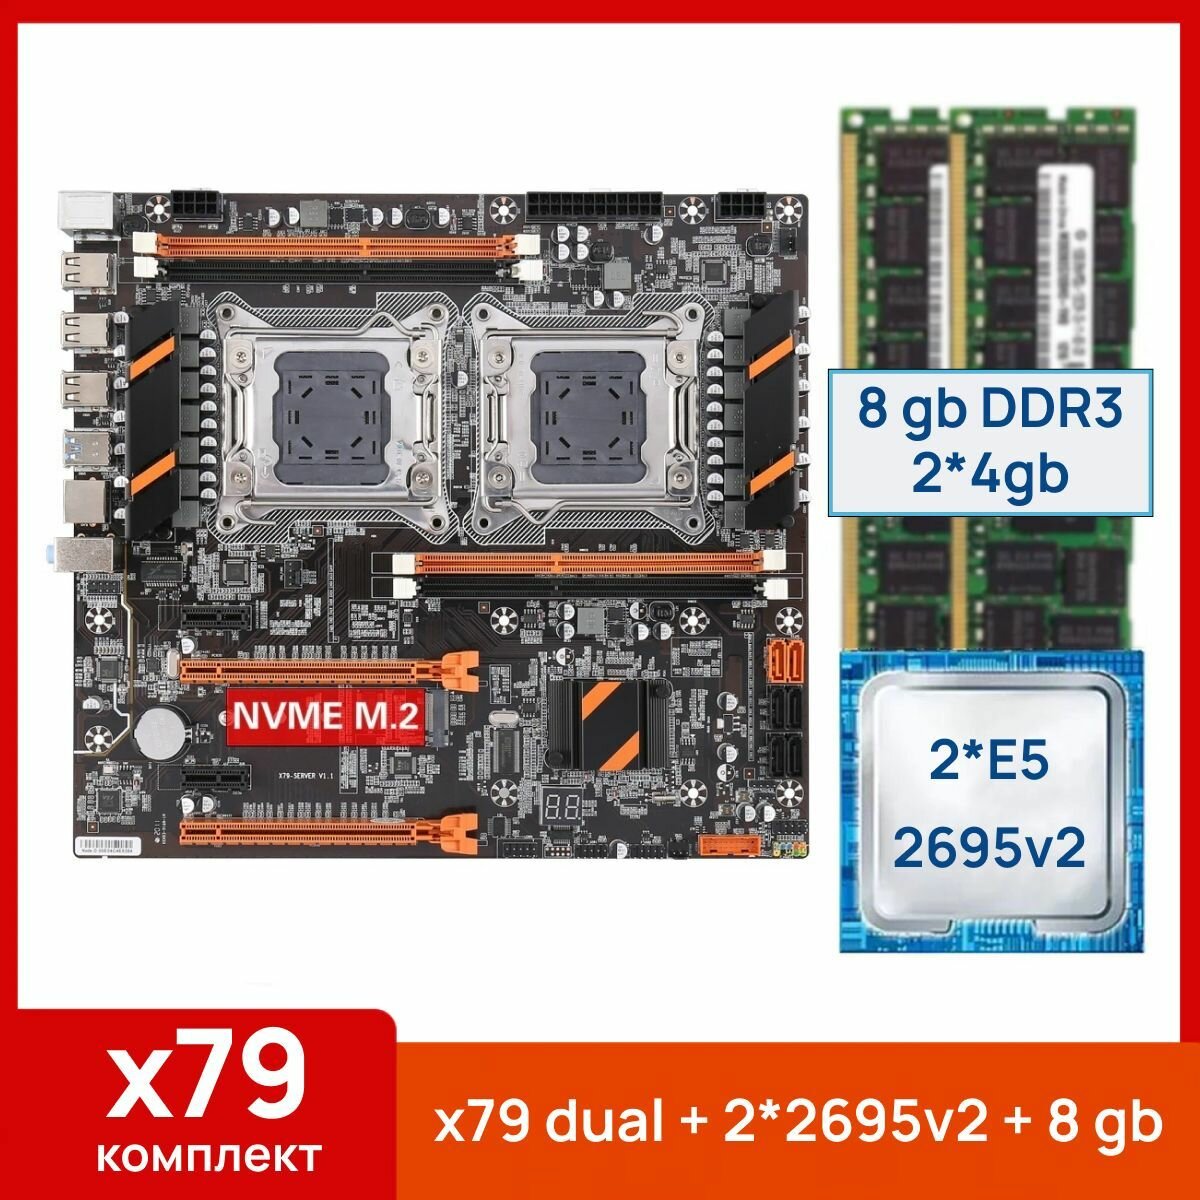 Комплект: Atermiter x79 dual + Xeon E5 2695v2*2 + 8 gb(2x4gb) DDR3 ecc reg